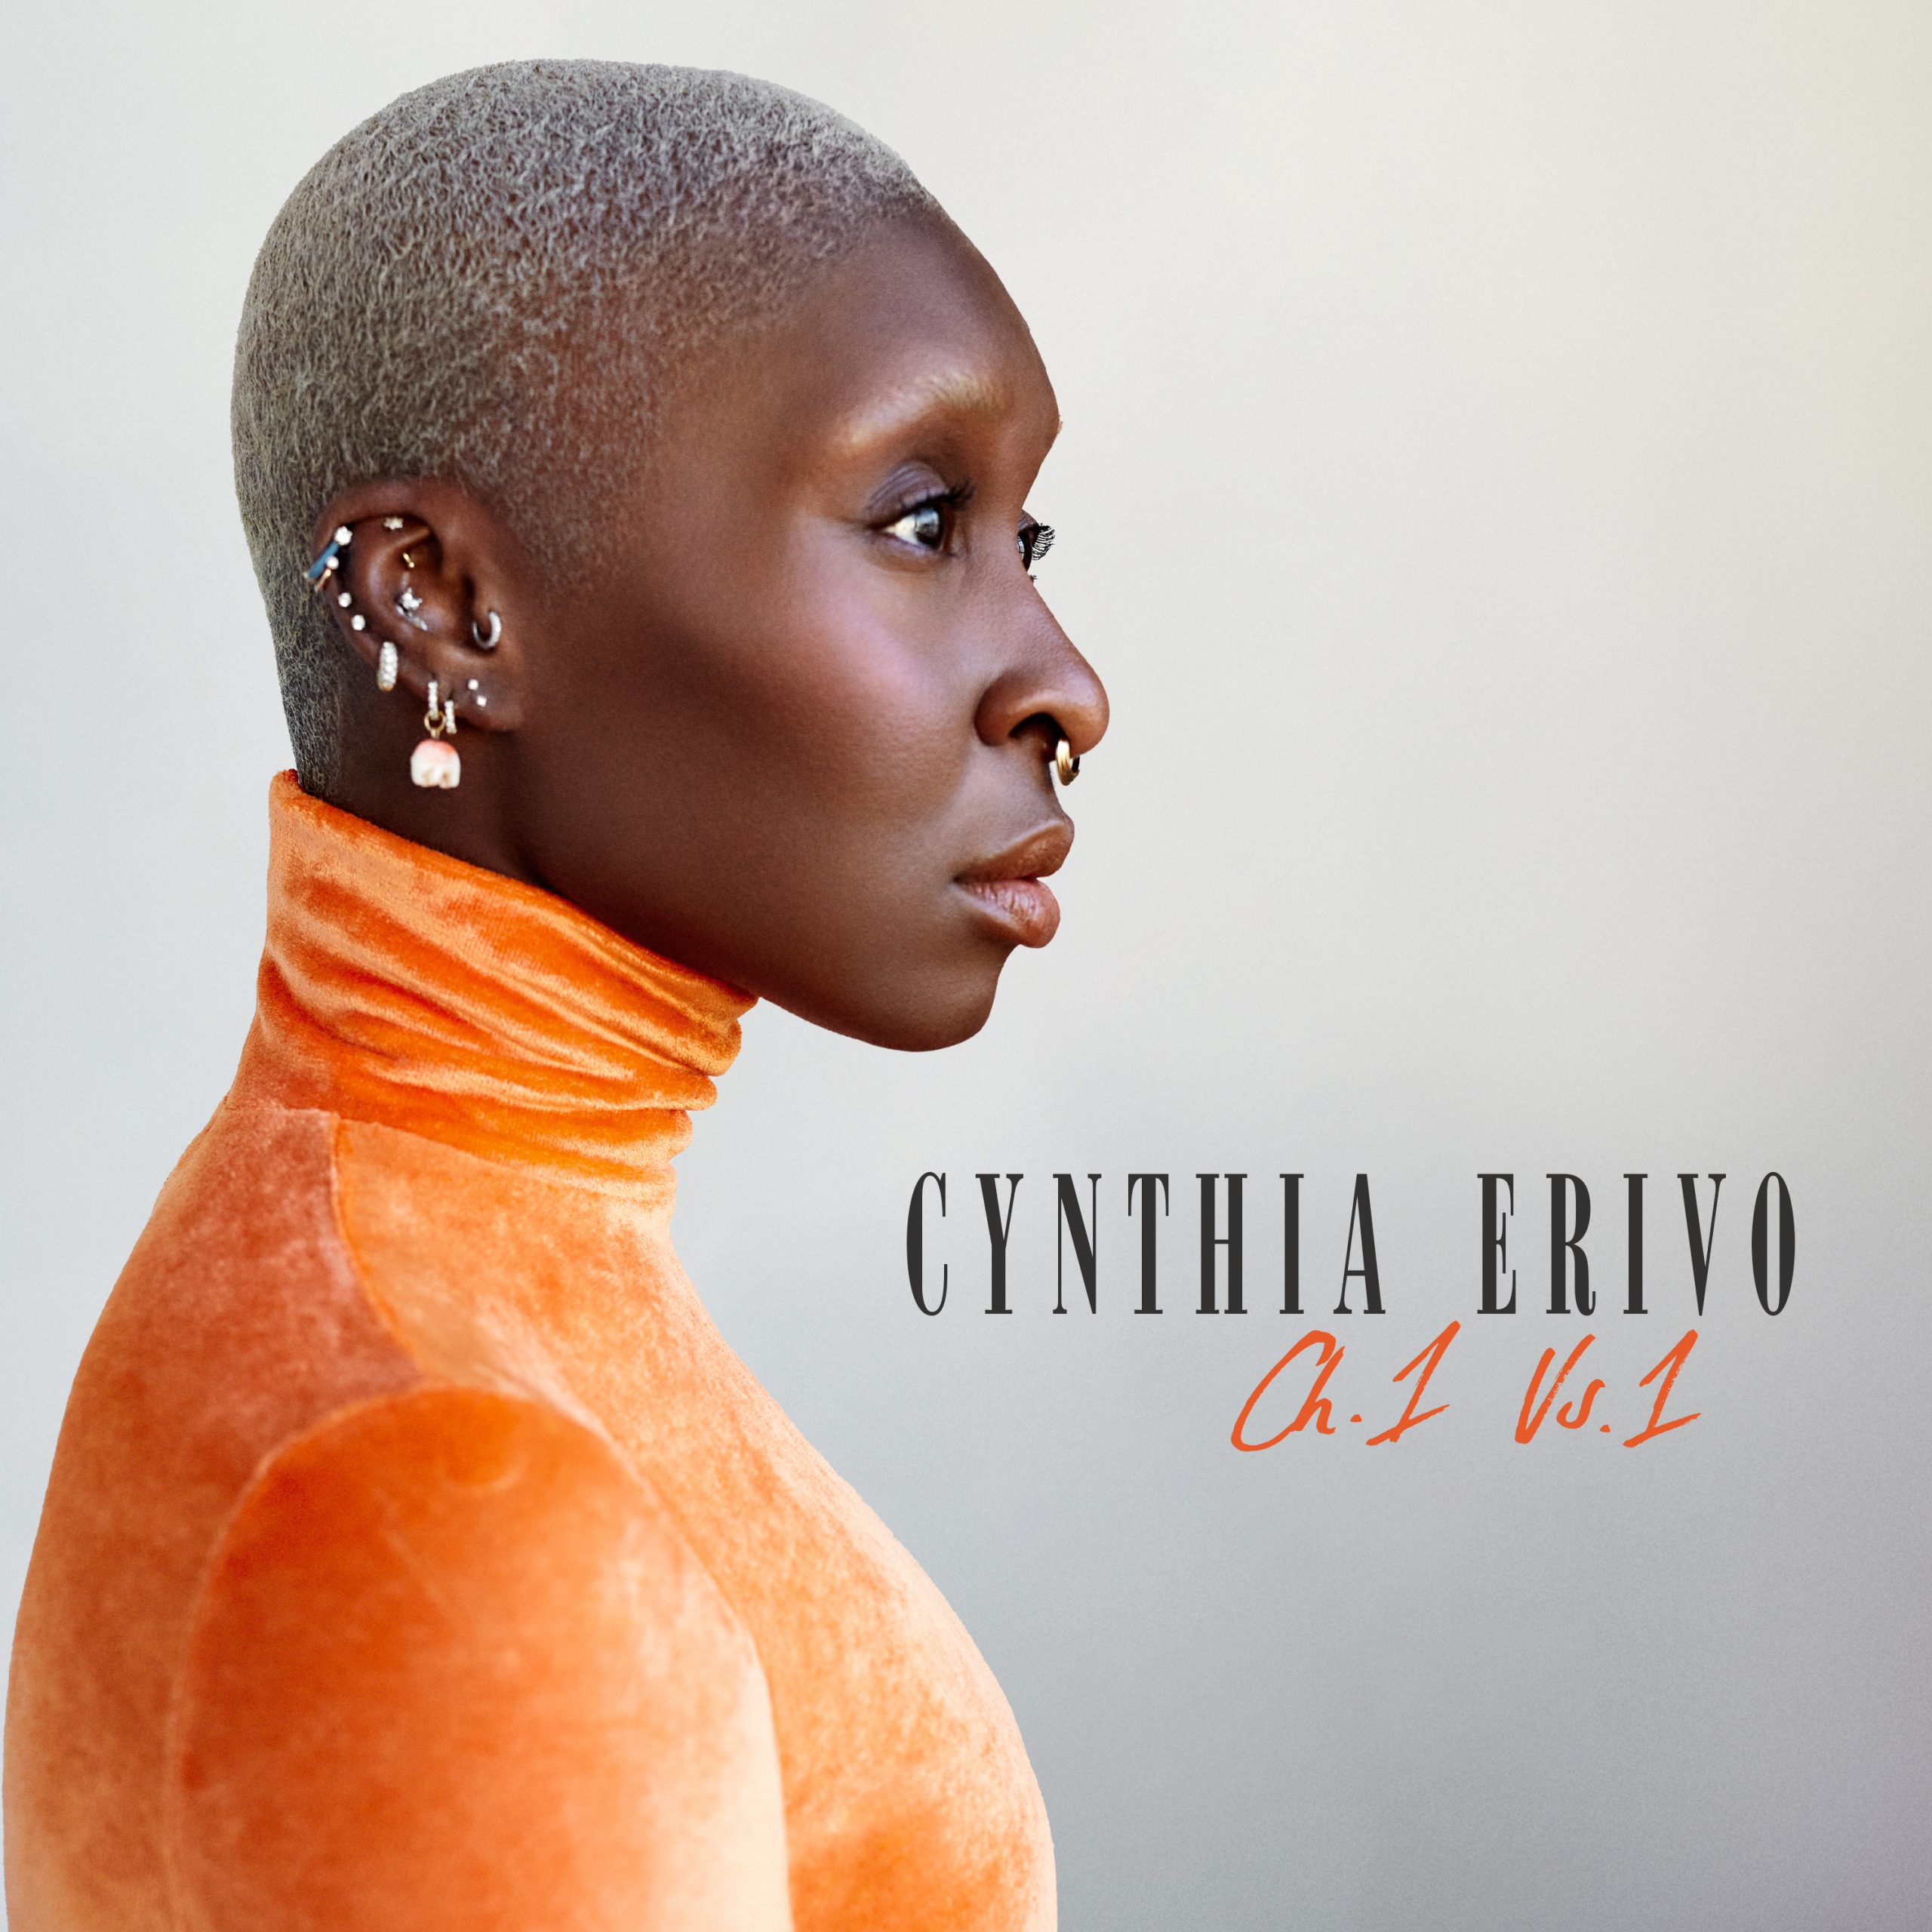 Cynthia Erivo Ch1 V1